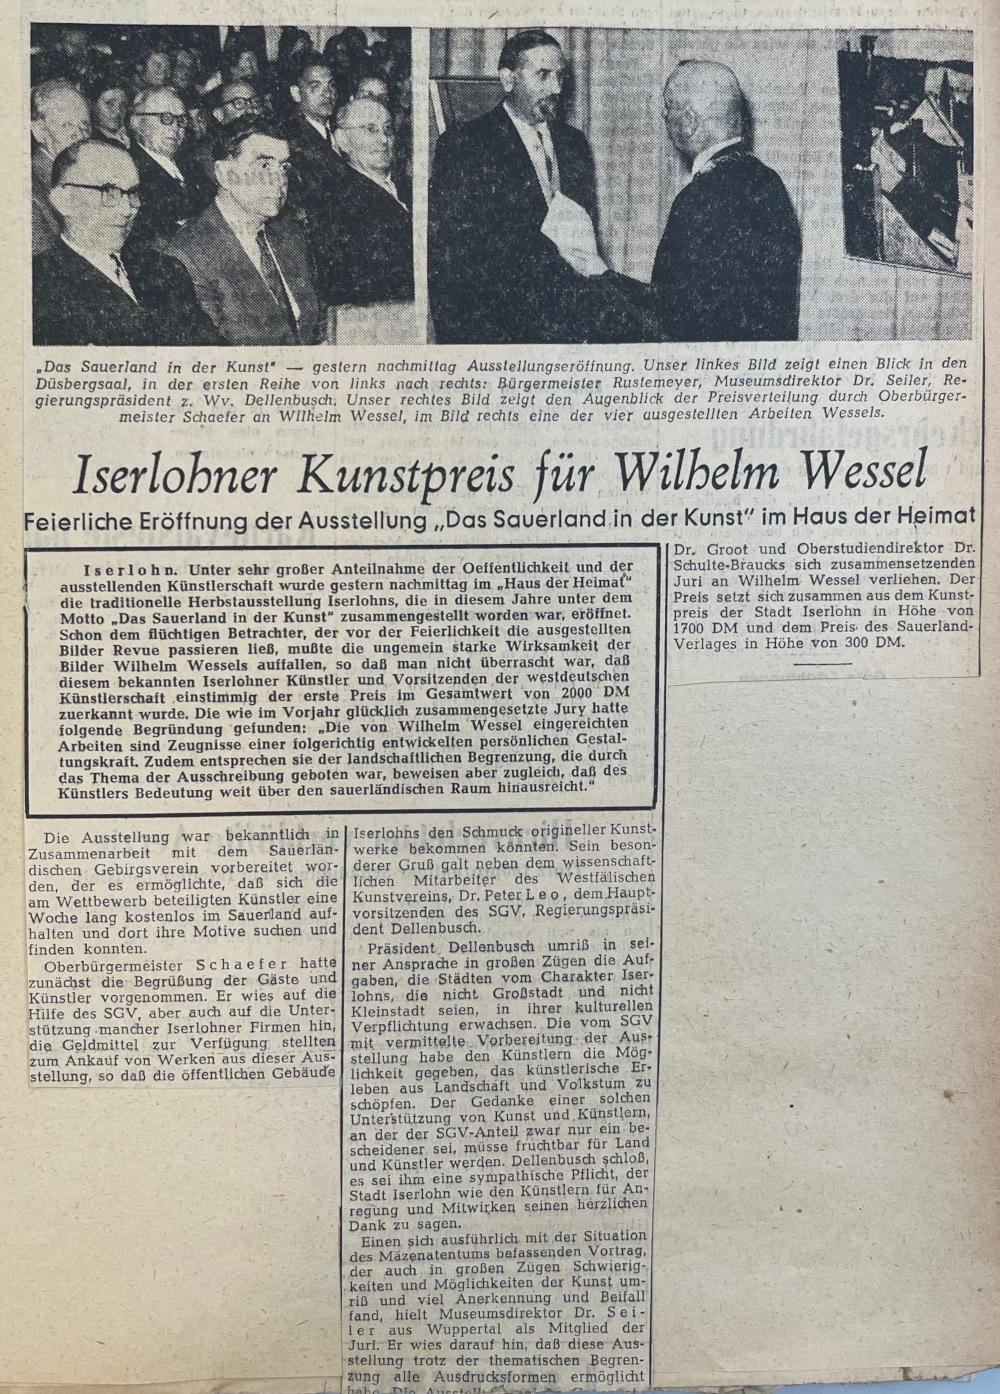 KP 1954 Wilhelm Wessel 18101954 IKZ 1000